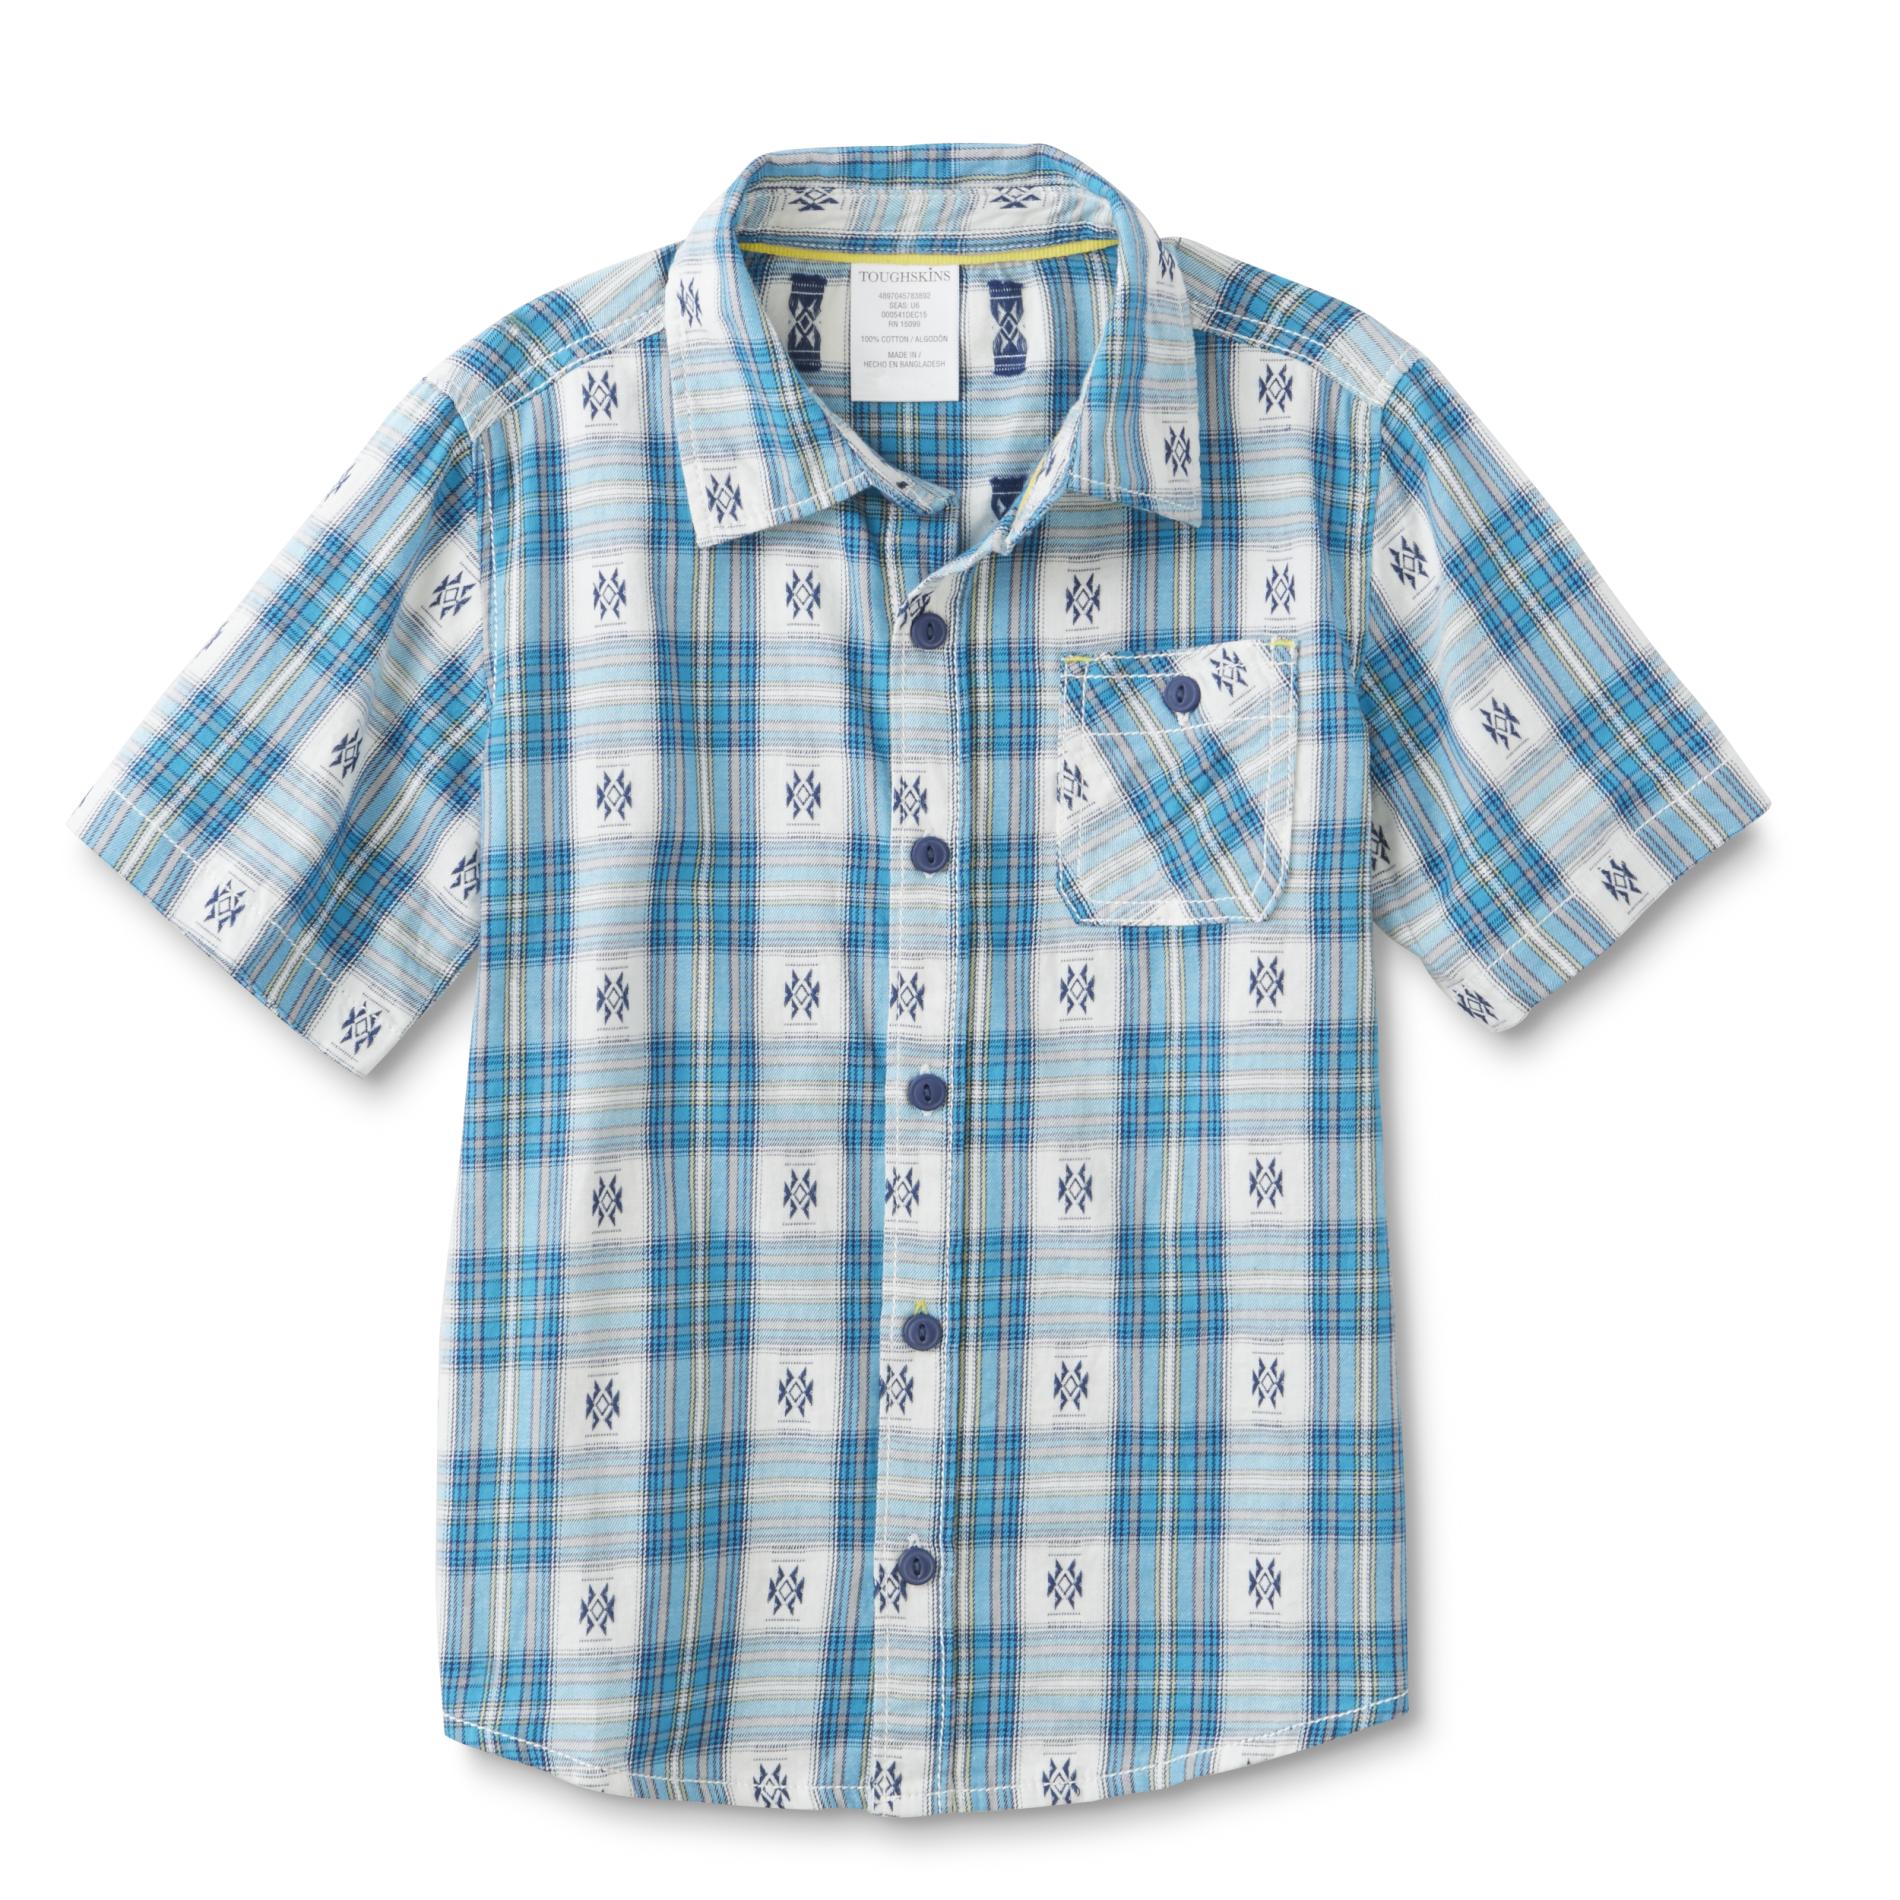 Toughskins Infant & Toddler Boy's Button-Front Shirt - Plaid & Tribal